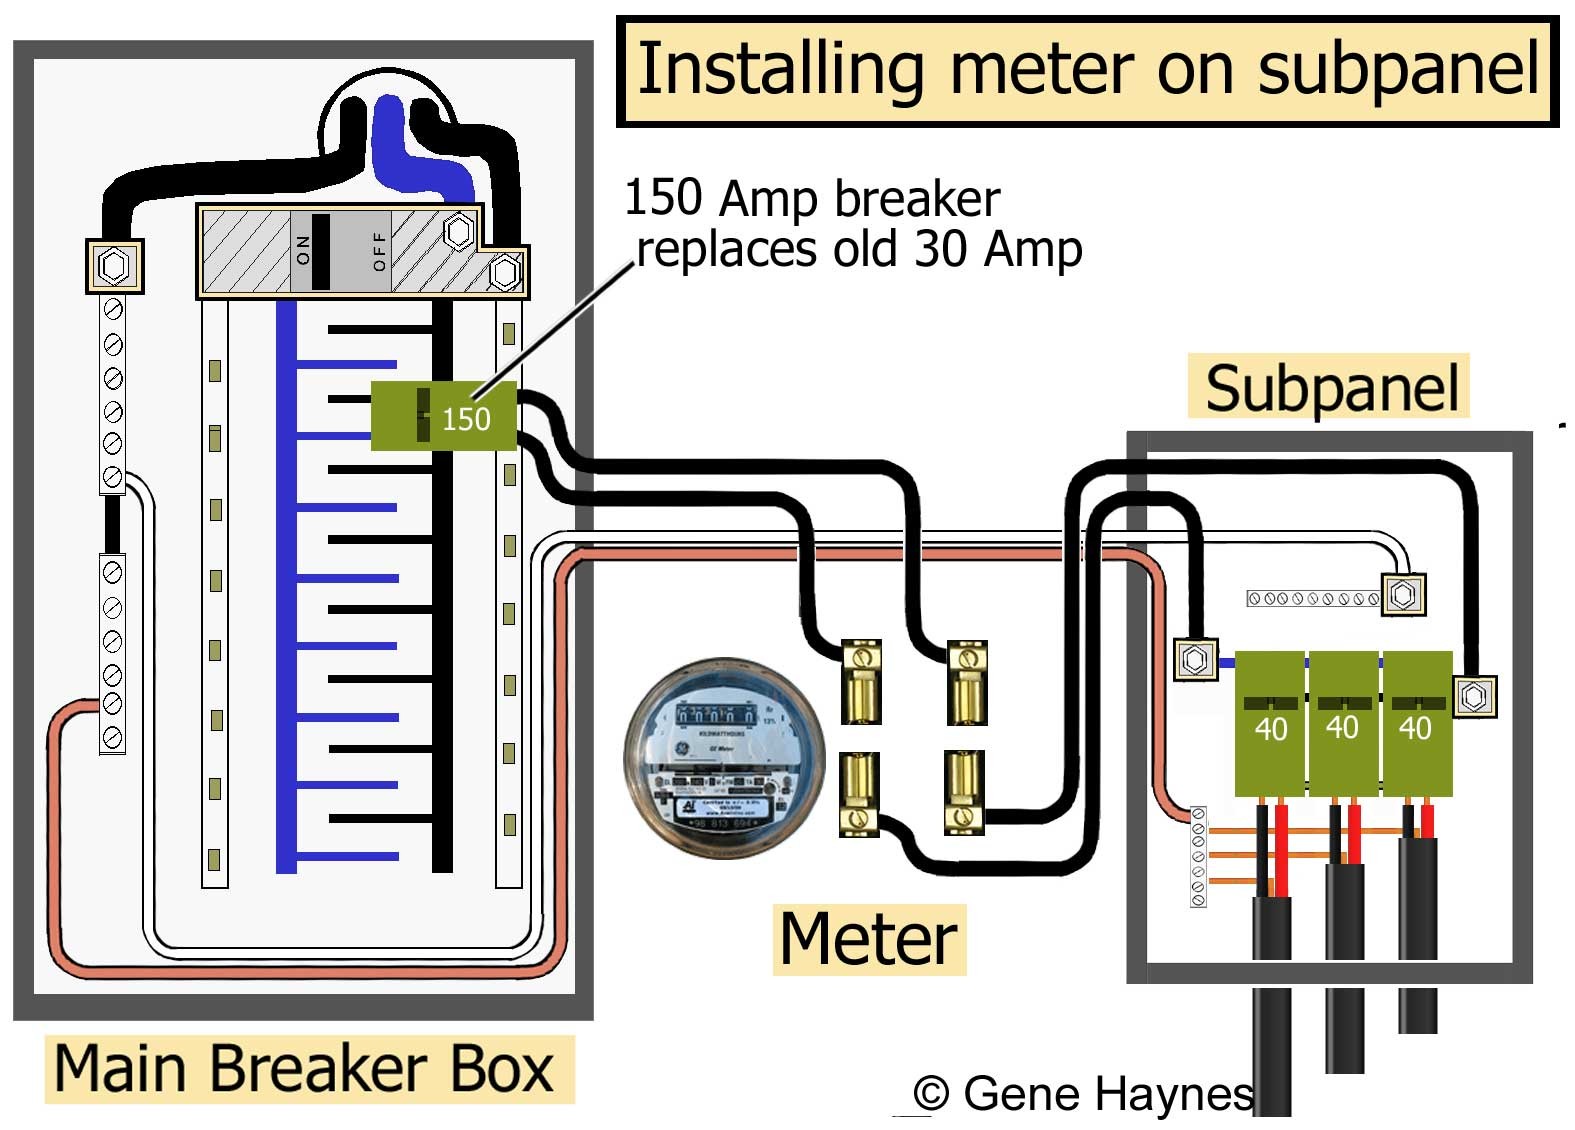 Put electric meter on Subpanel